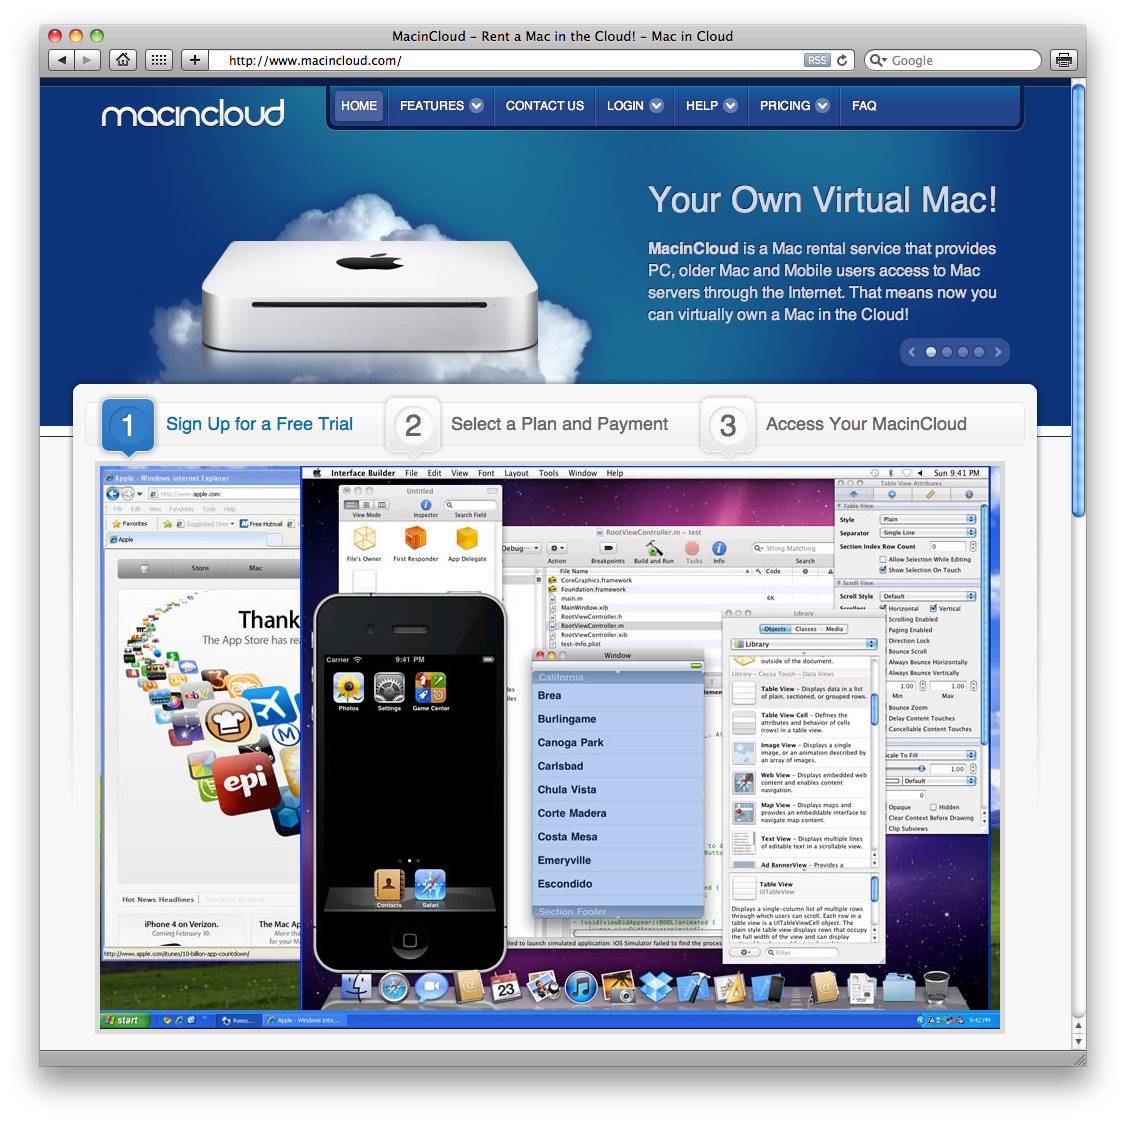 MacinCloud service allows you to “rent” a Mac virtually and access it via the cloud